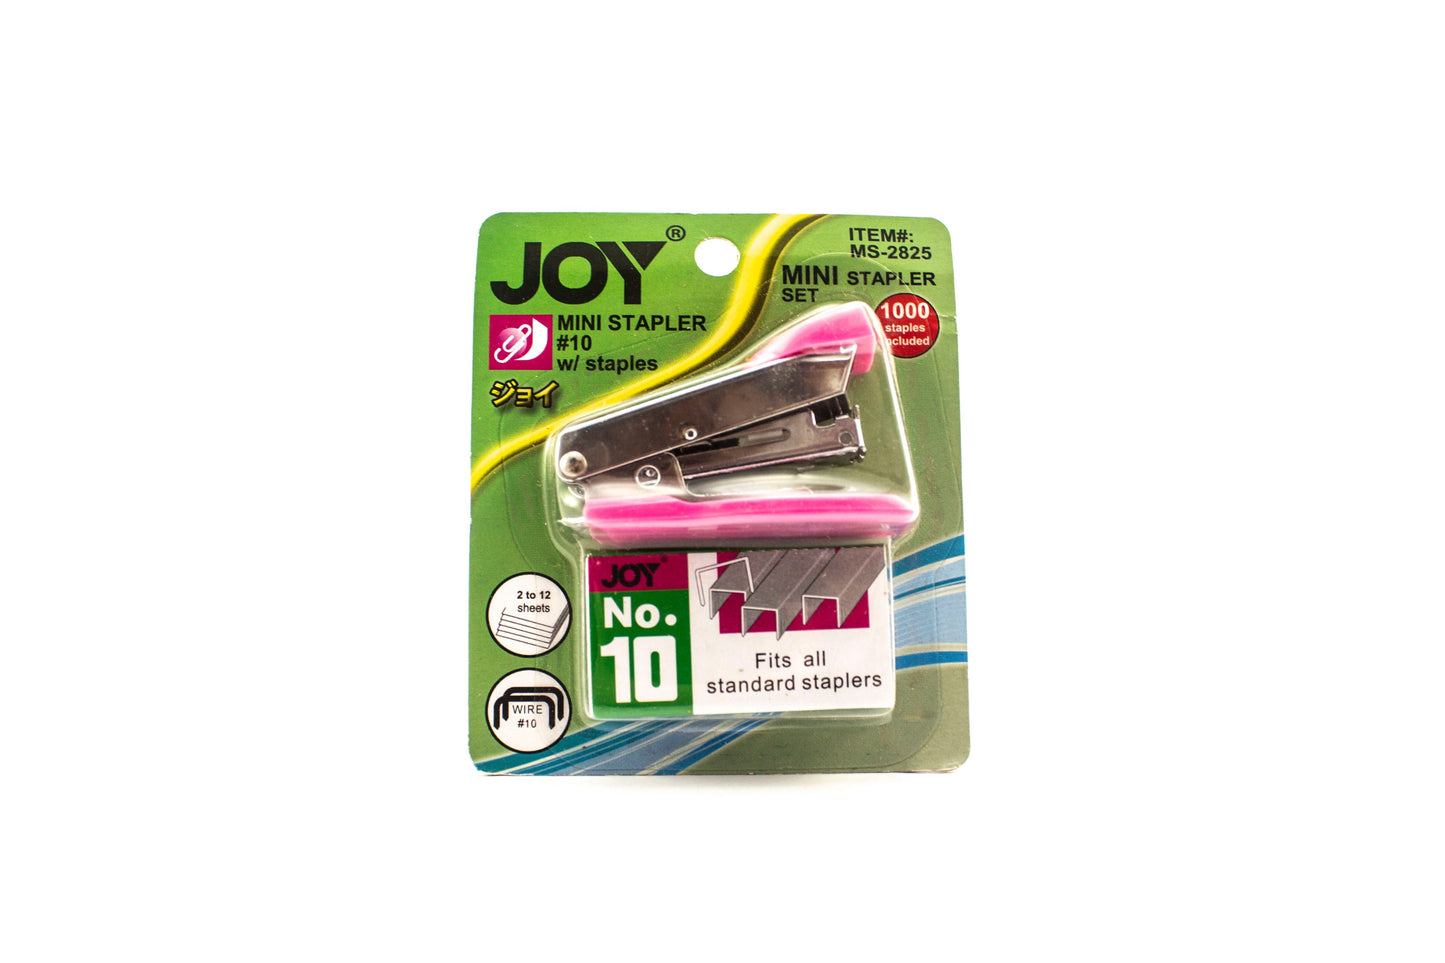 Joy Mini Stapler MS-2825 with Staple Wire Set